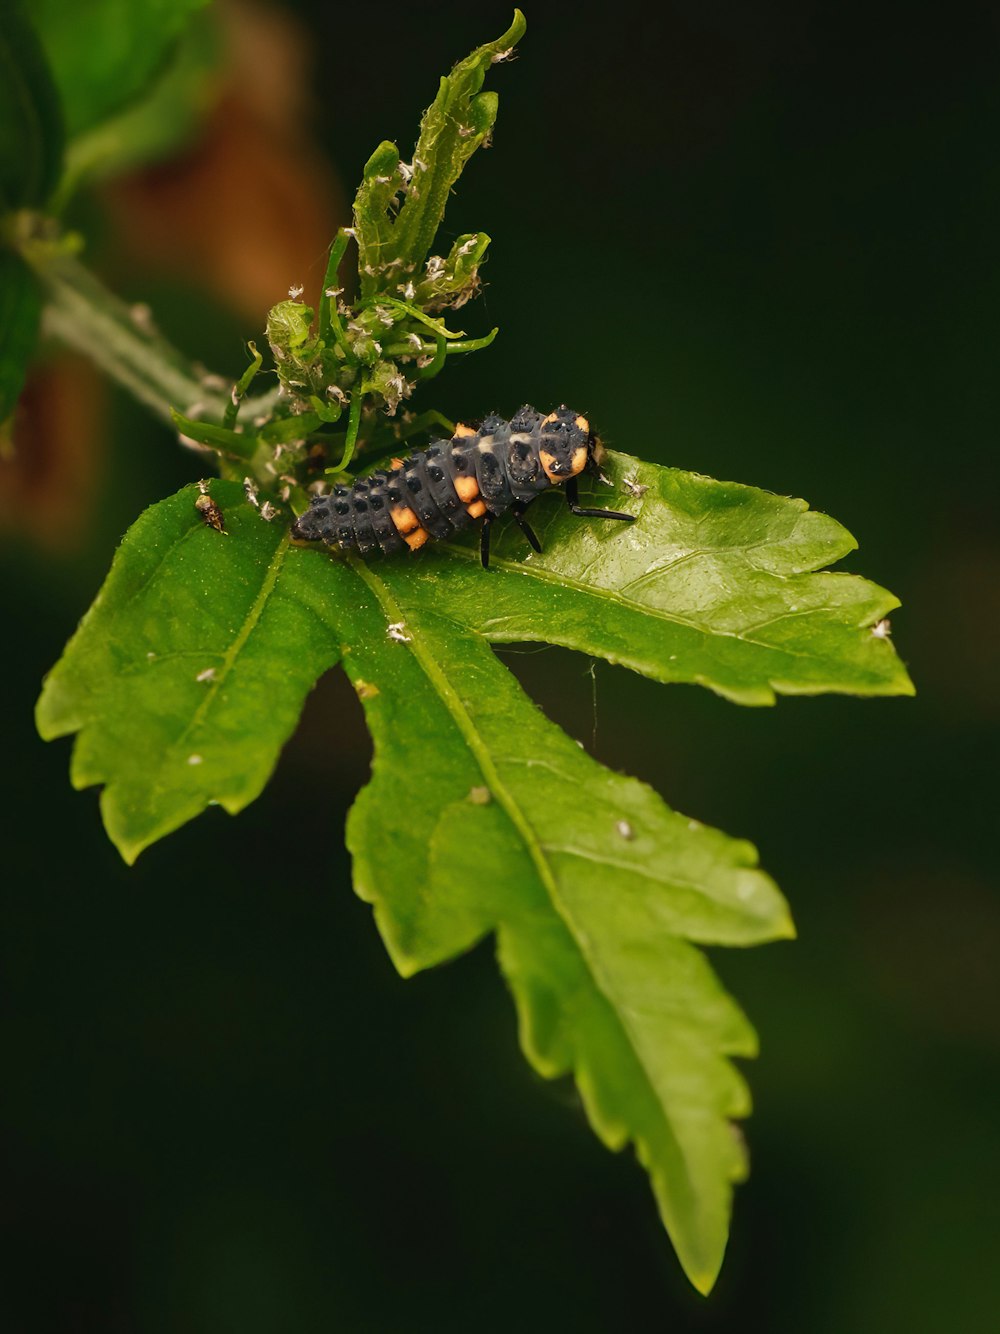 a black and orange bug on a green leaf